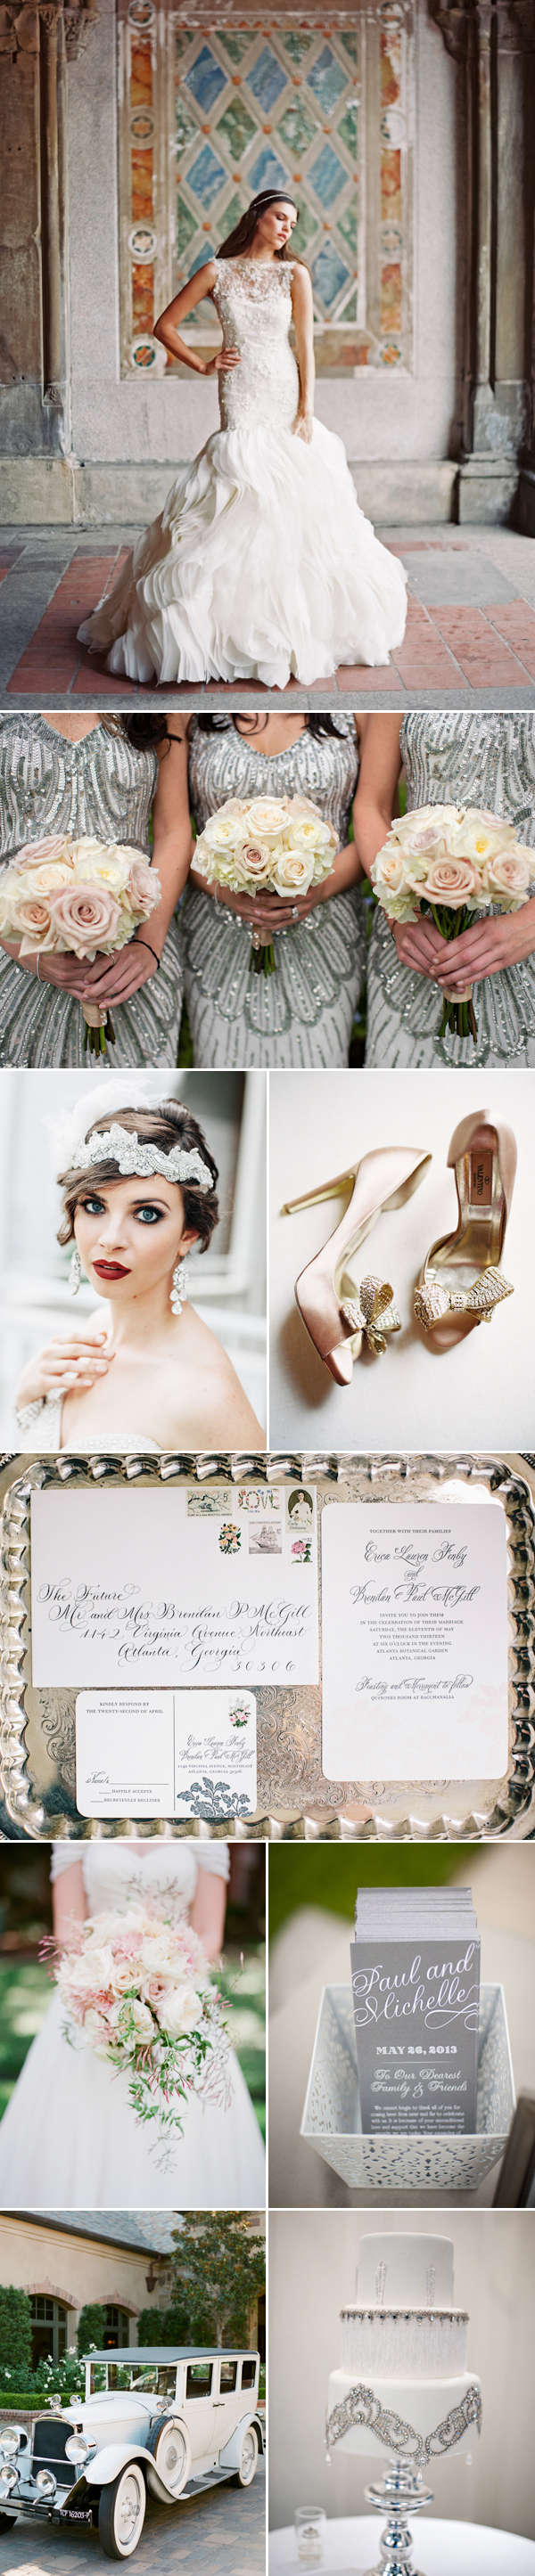 silver and blush wedding color palette inspiration board | via junebugweddings.com